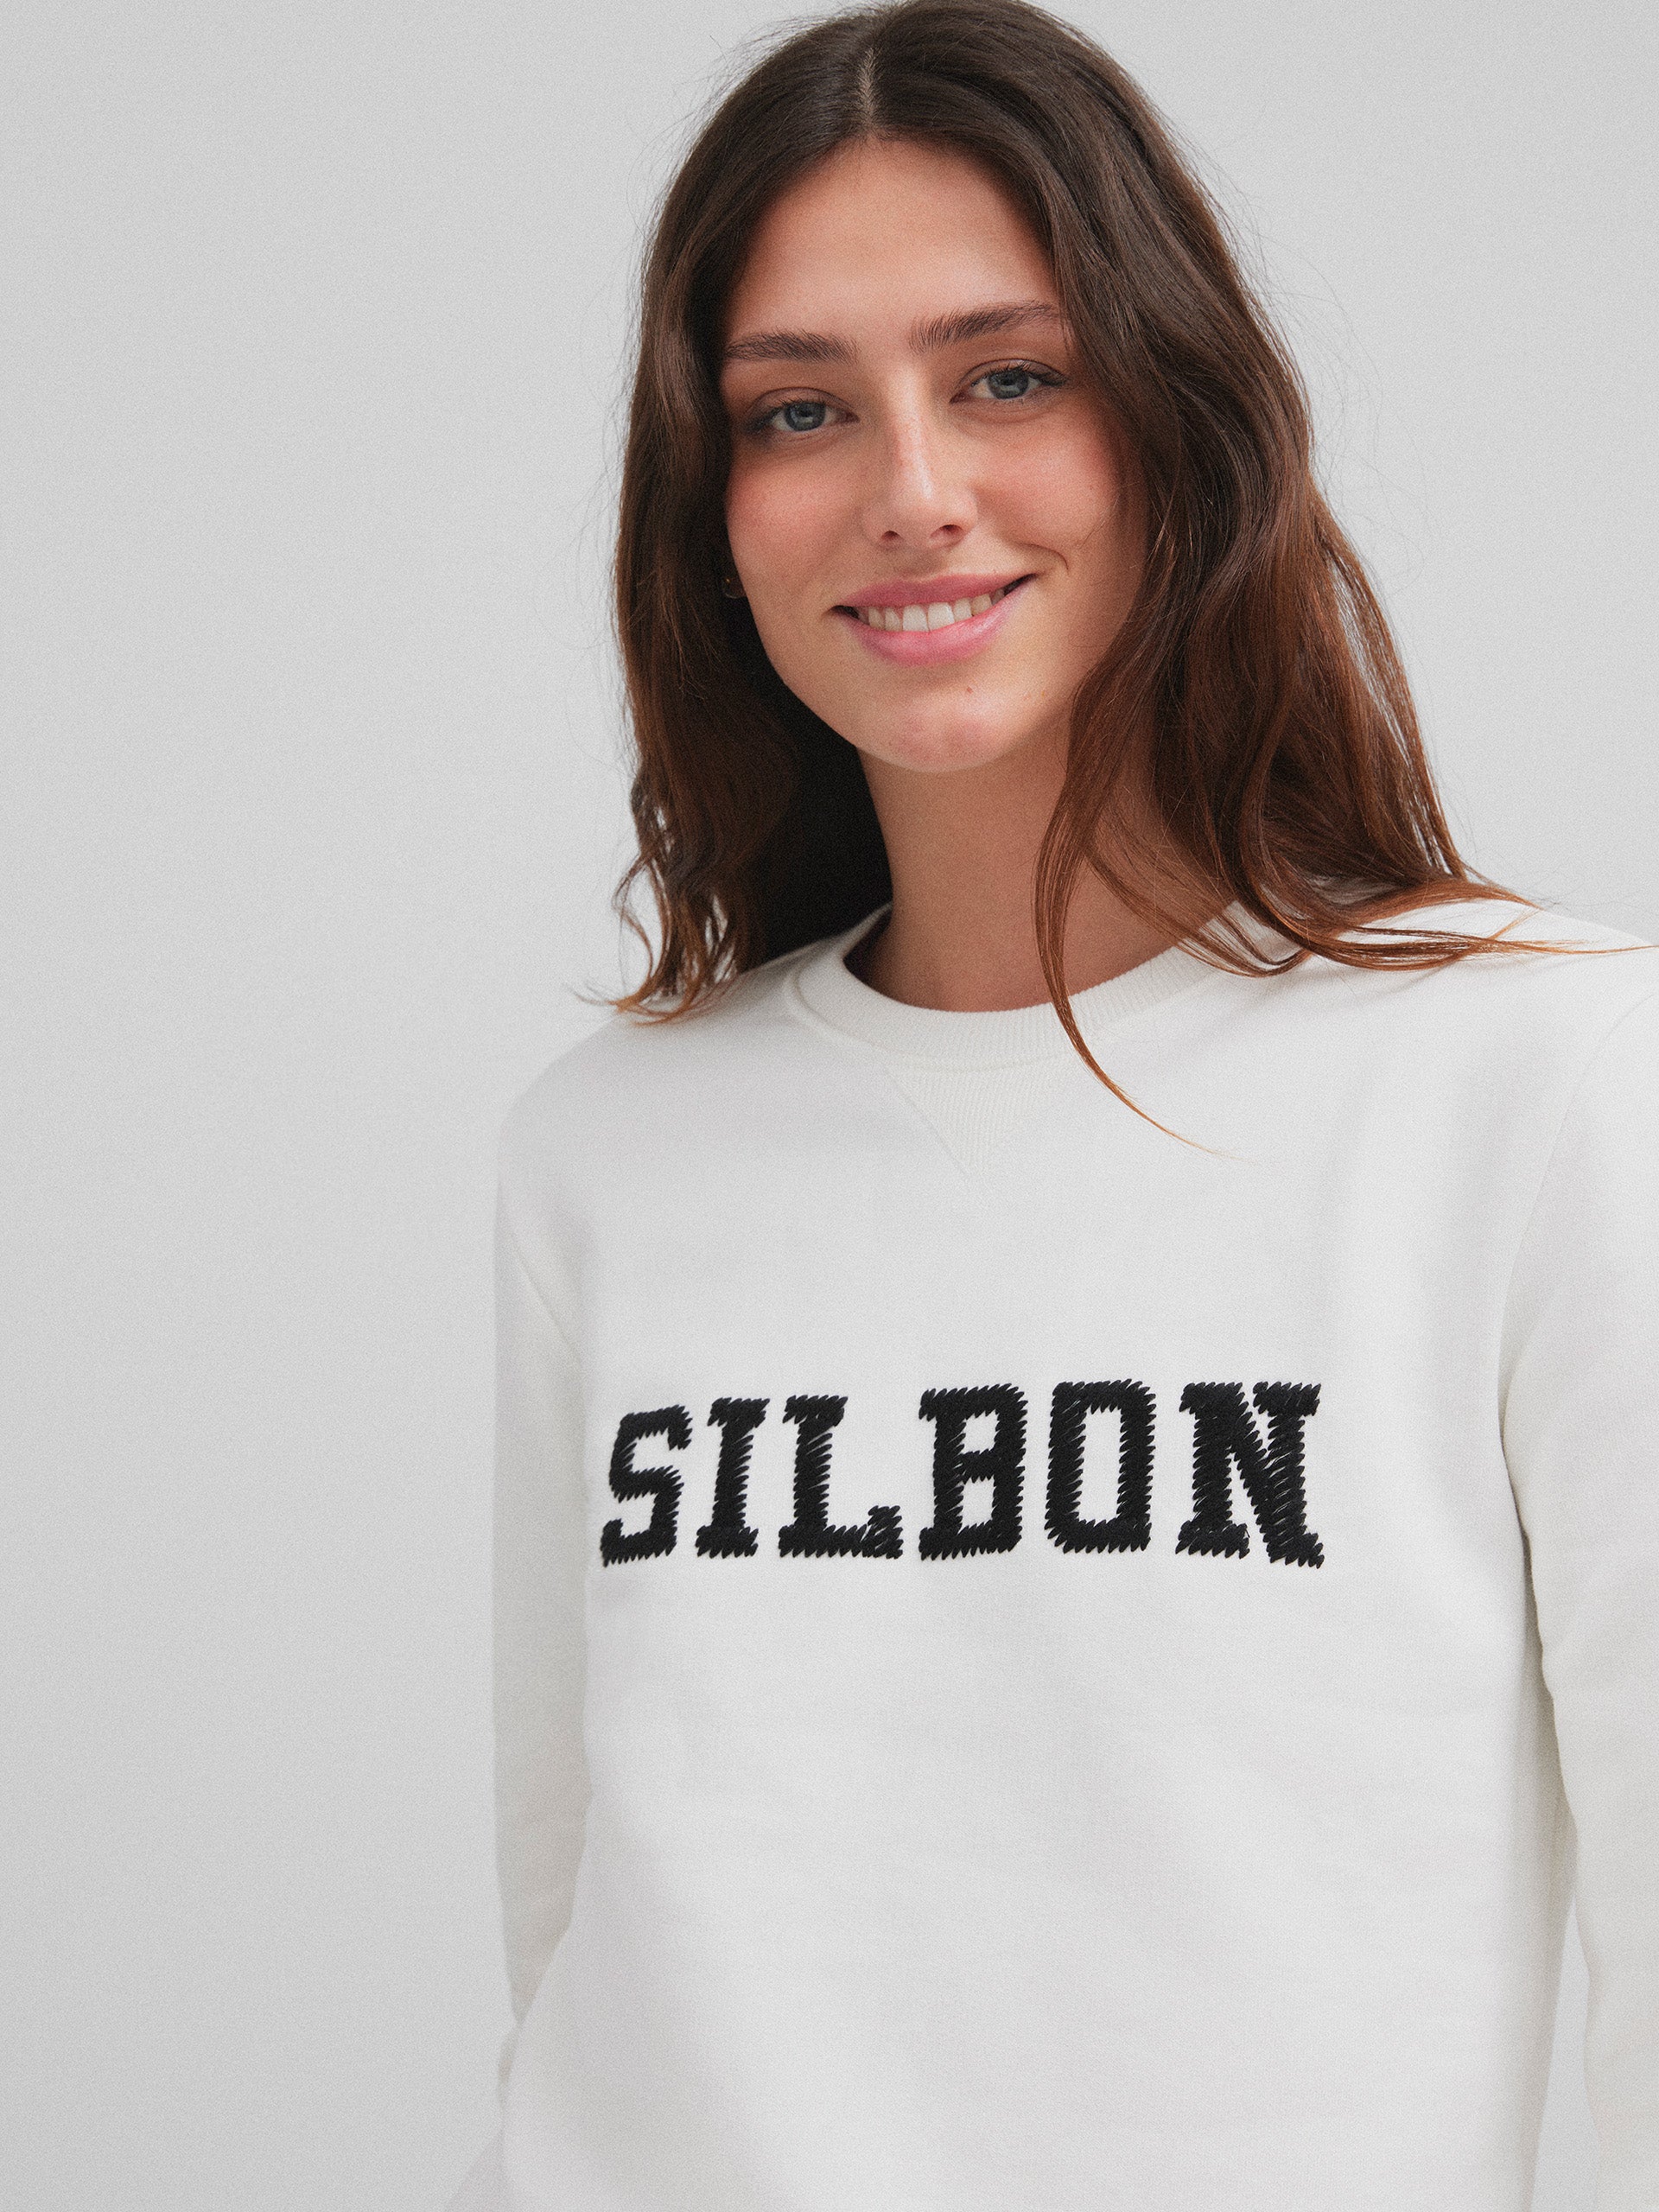 Women's sweatshirt with white Silbon letters